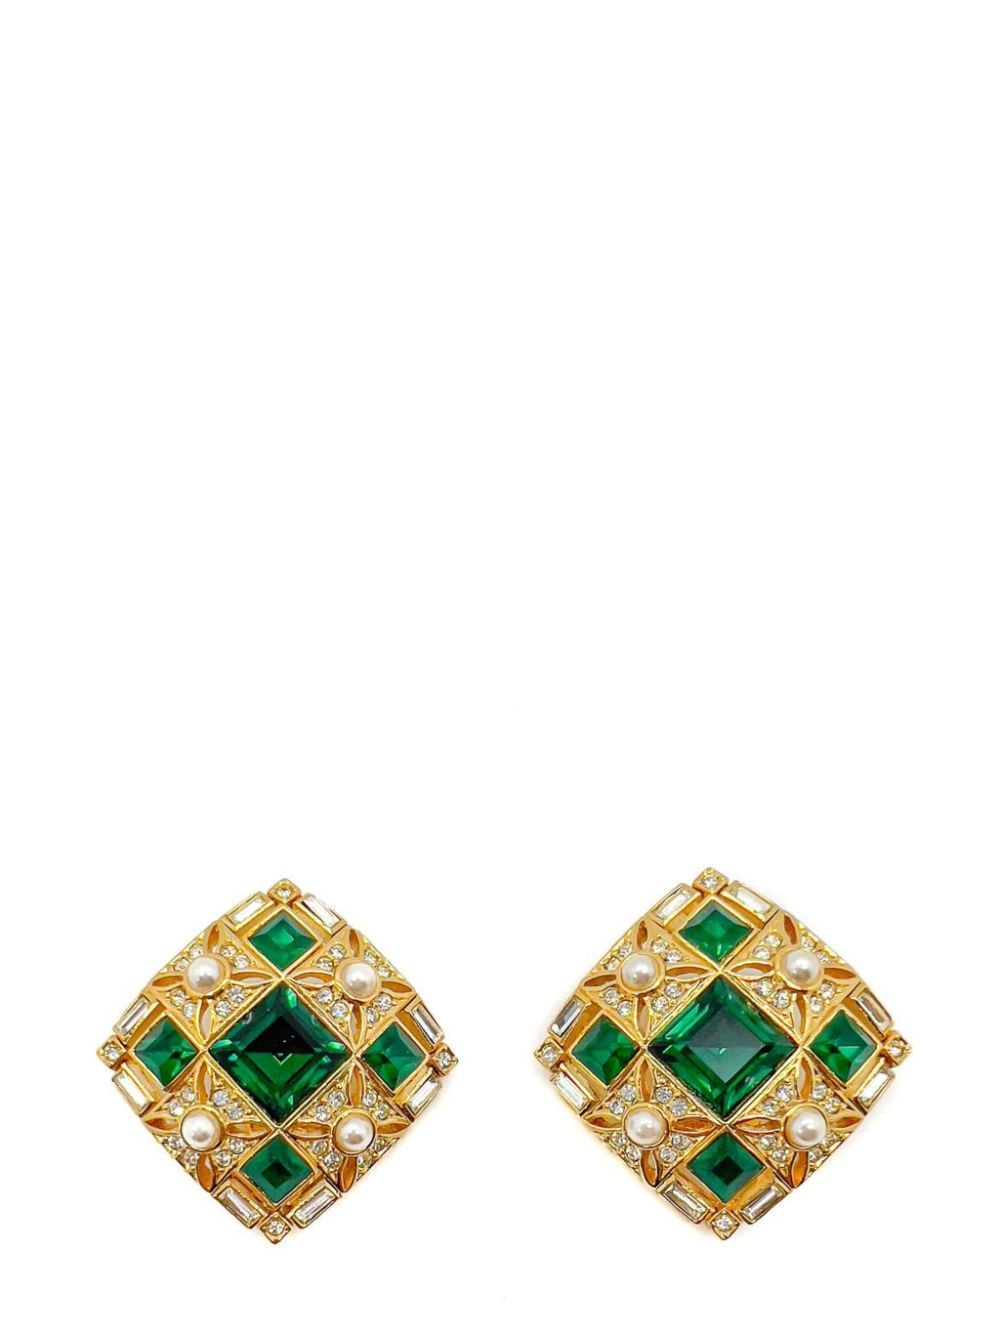 Jennifer Gibson Jewellery Vintage Square Cut Emerald Crystal & Pearl Earrings 1980s - Gold von Jennifer Gibson Jewellery